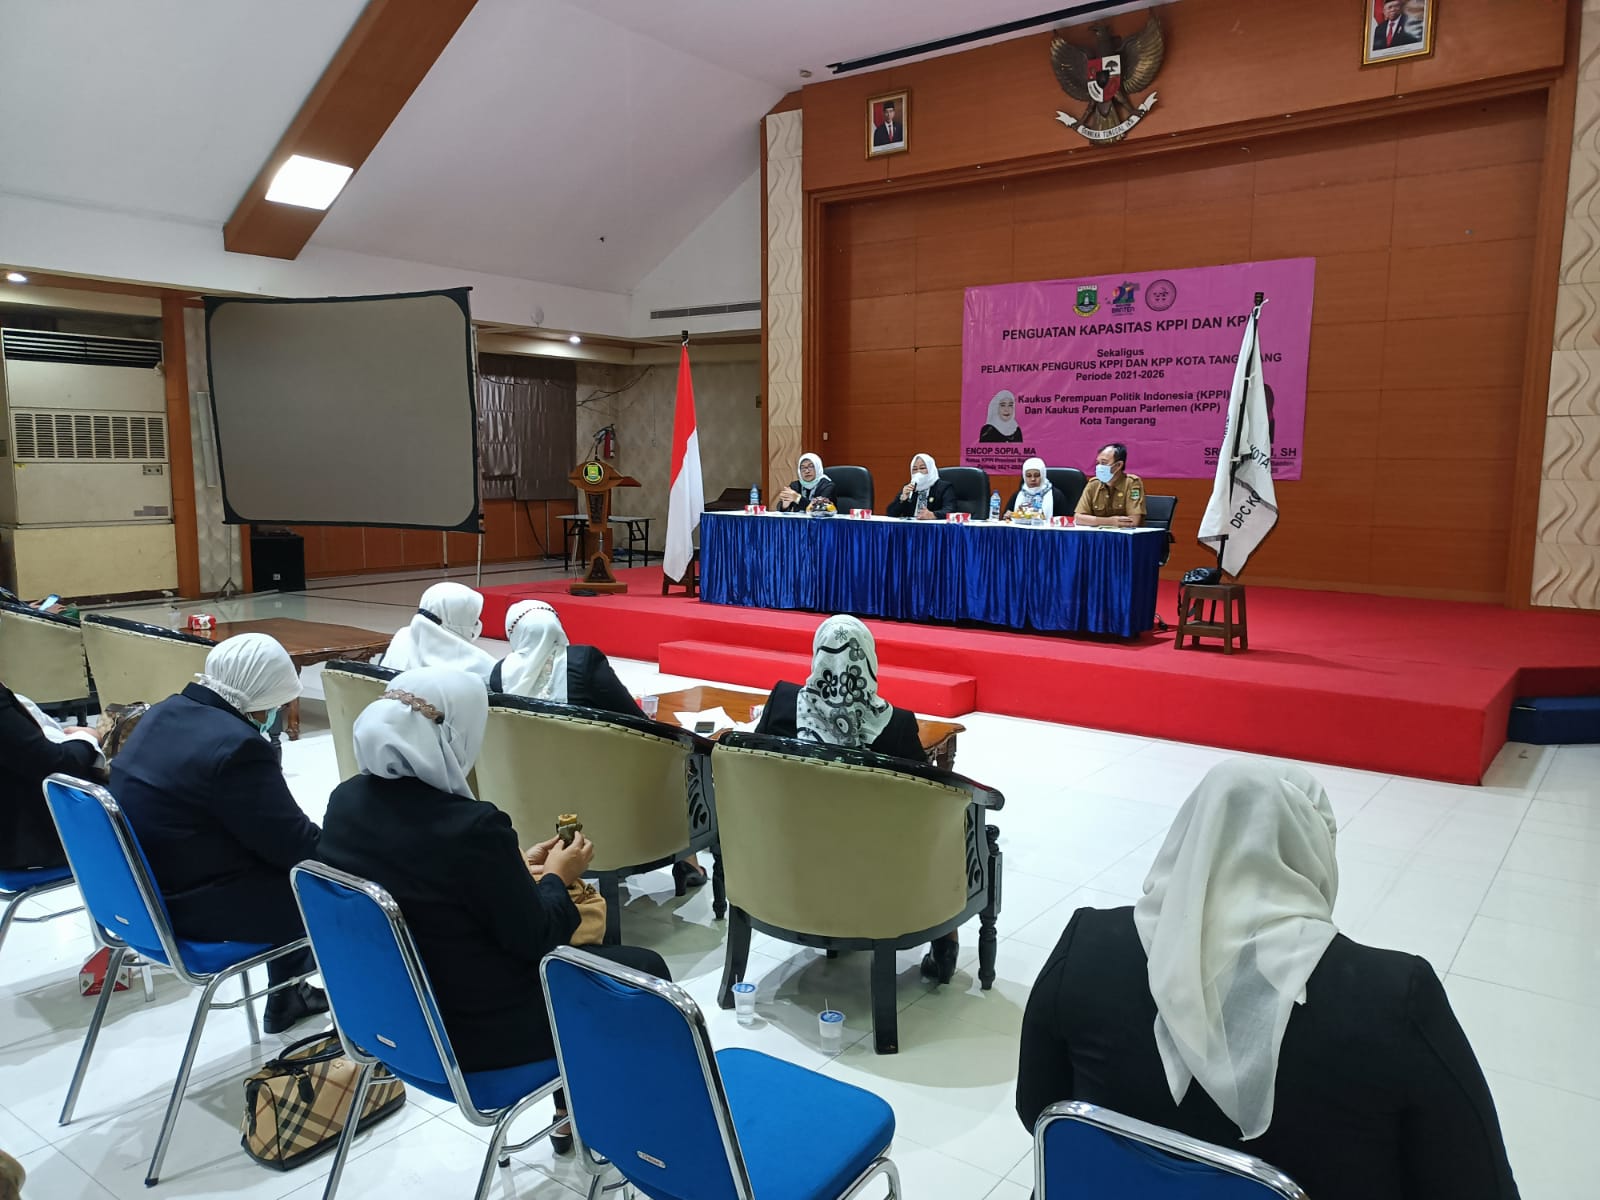 Kegiatan penguatan kapasitas KPPI dan KPP sekaligus pelantikan pengurus KPPI dan KPP Kota Tangerang periode 2021-2026 di Ruang Al Amanah, Puspemkot Tangerang